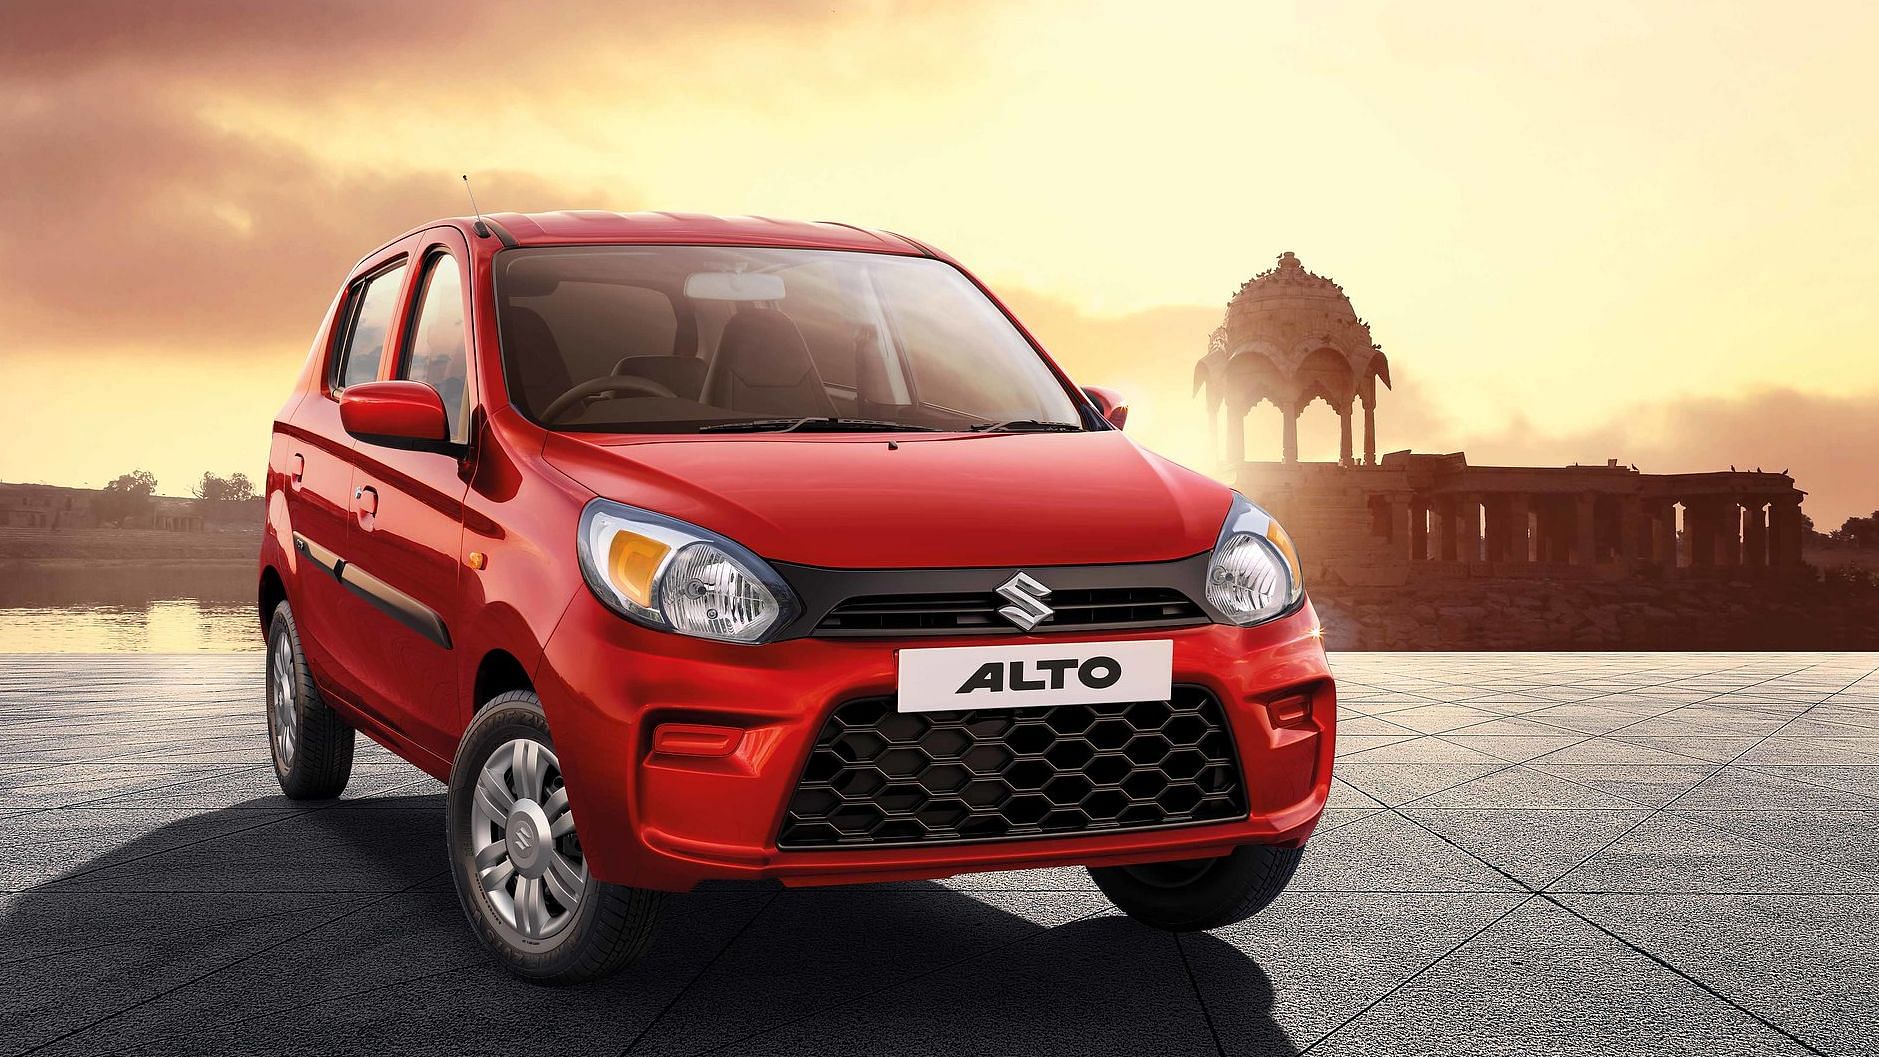 Prices of the 2019 Maruti Suzuki Alto 800 start at Rs 2.93 lakh ex-showroom.&nbsp;